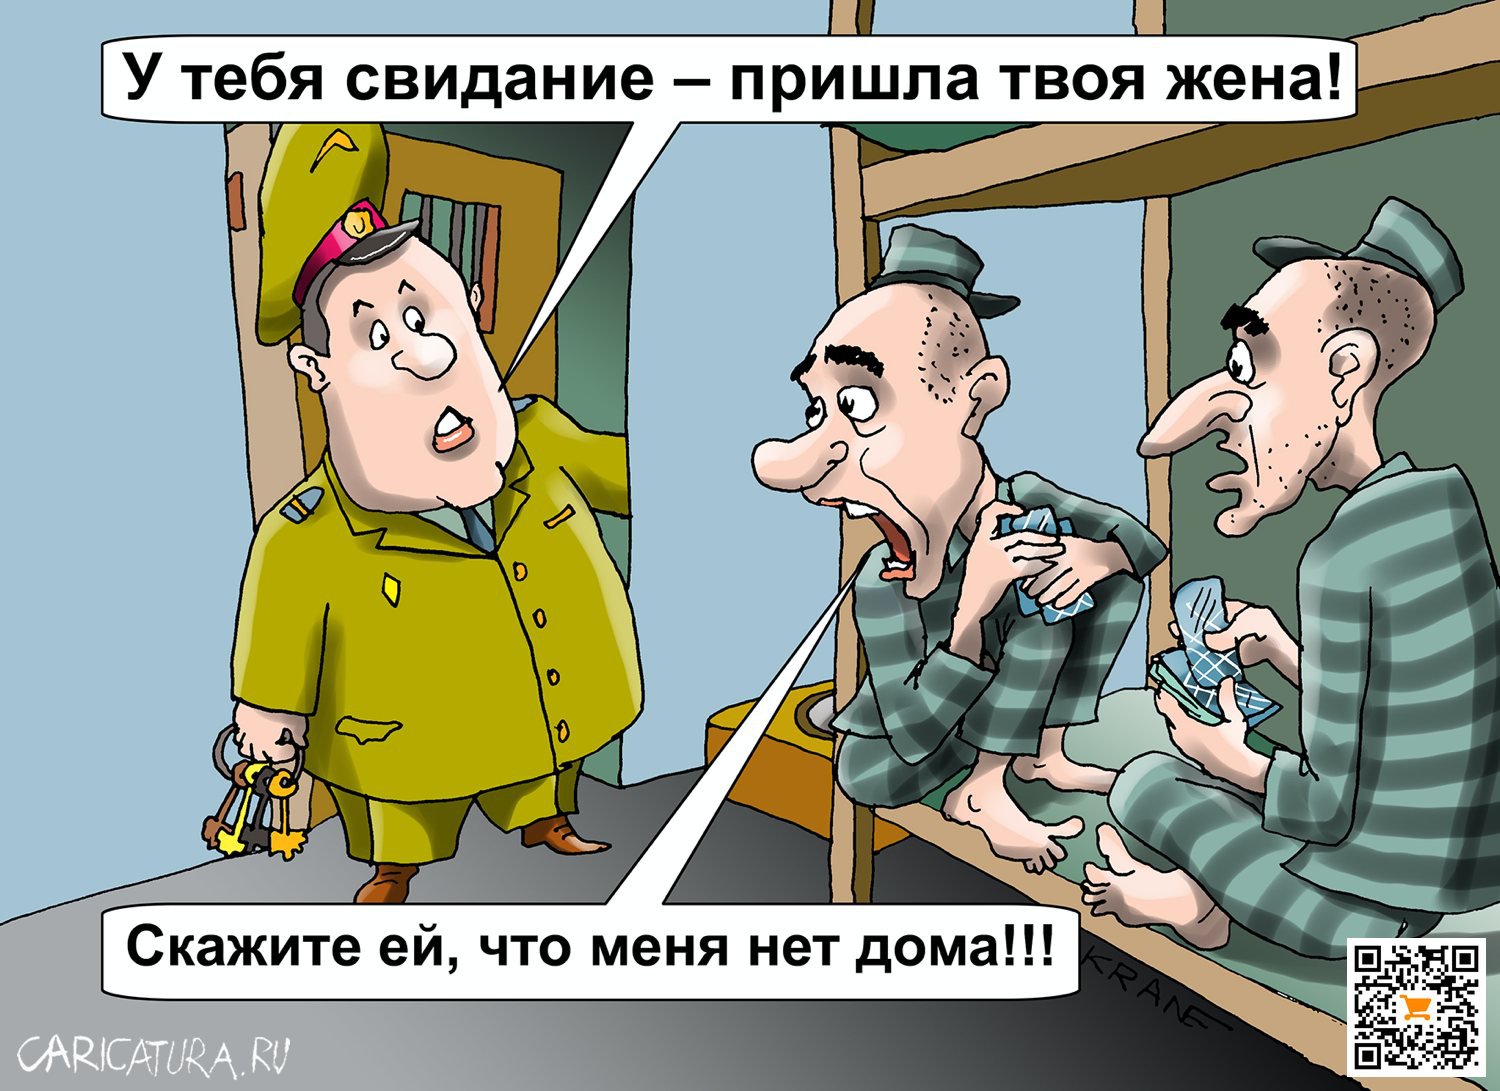 Карикатура "Пойти бы снова под венец", Евгений Кран